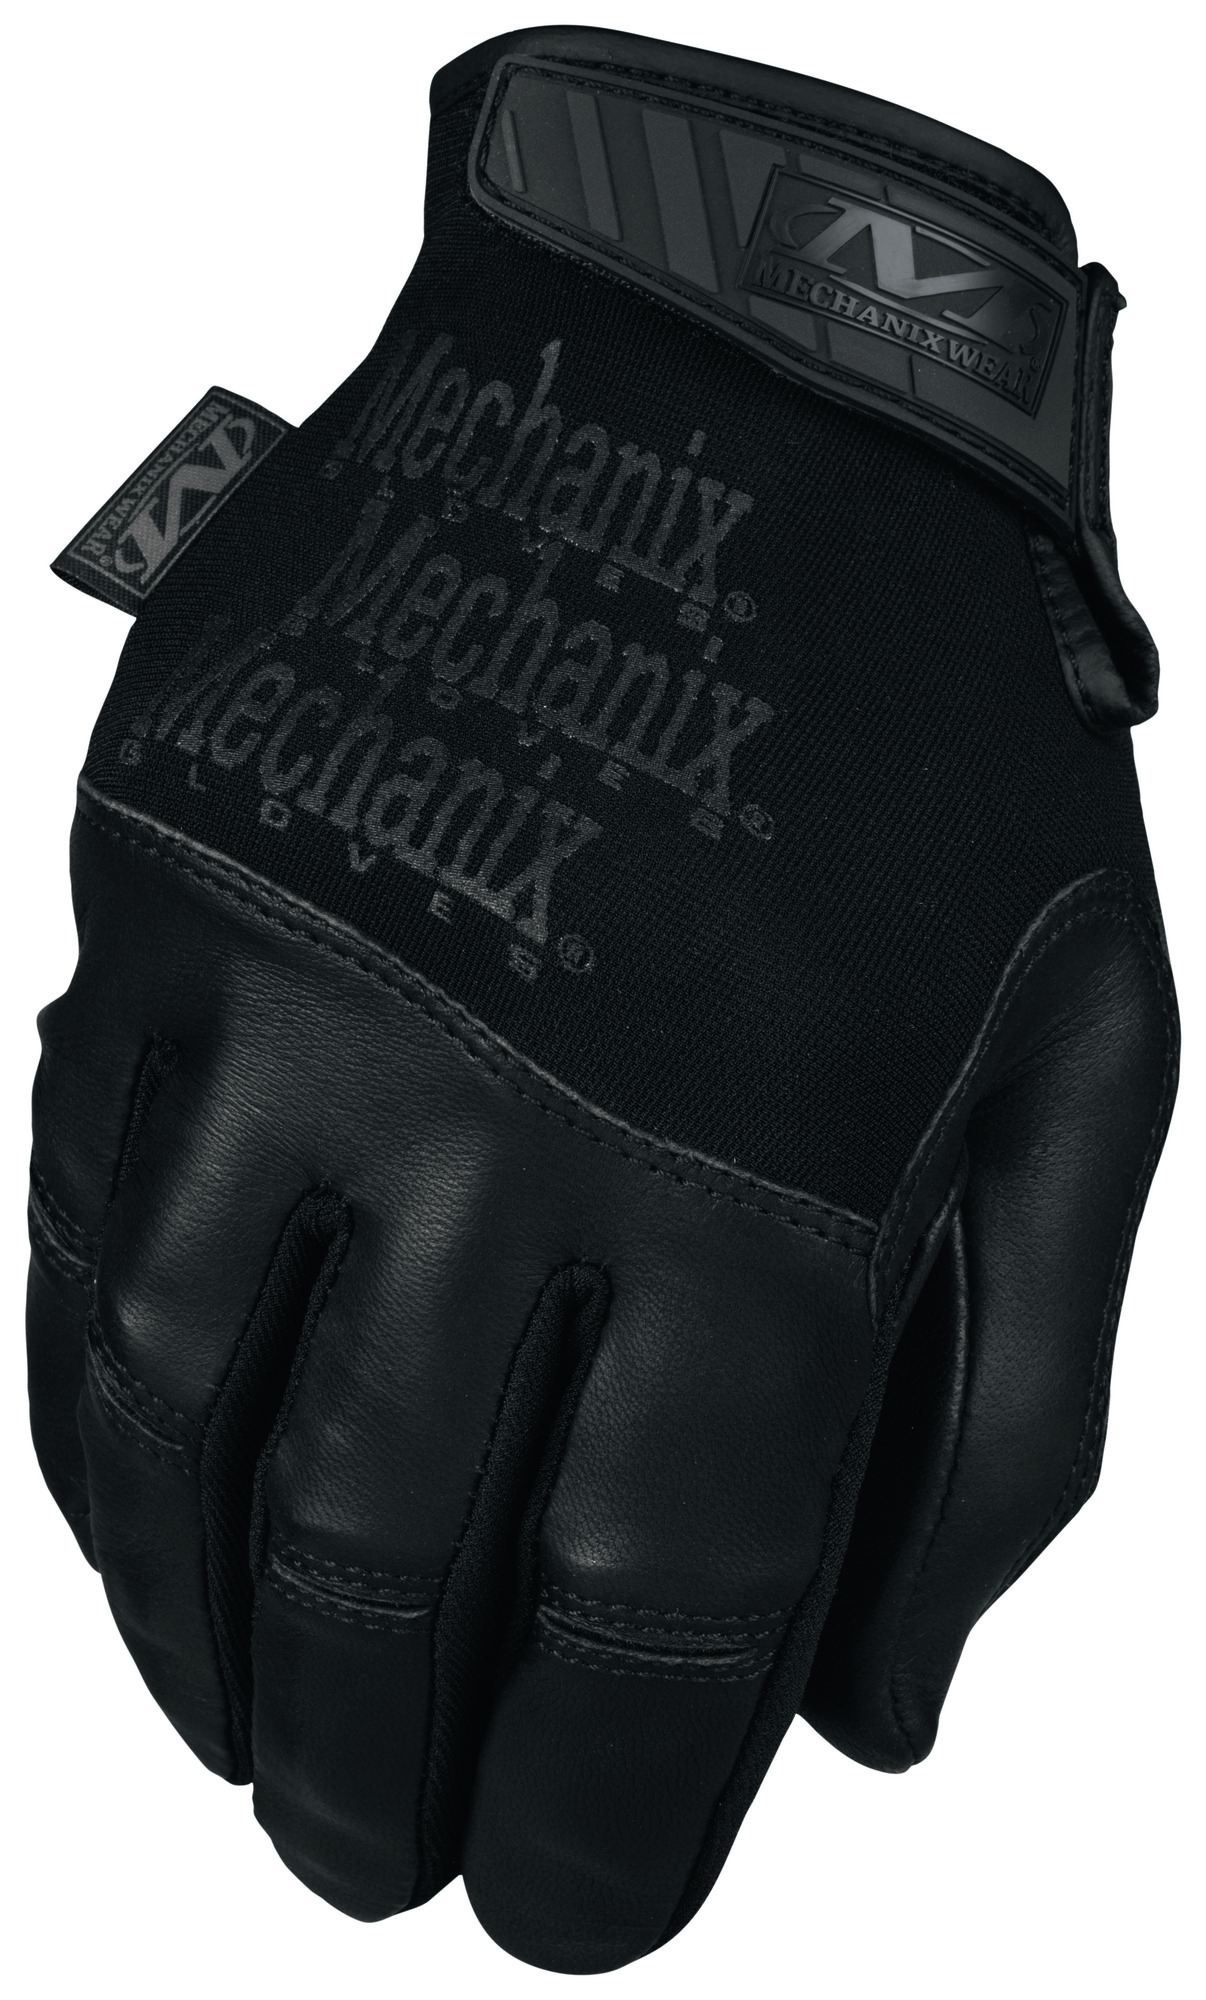 MECHANIX rukavice Recon - Covert - čierne M/9